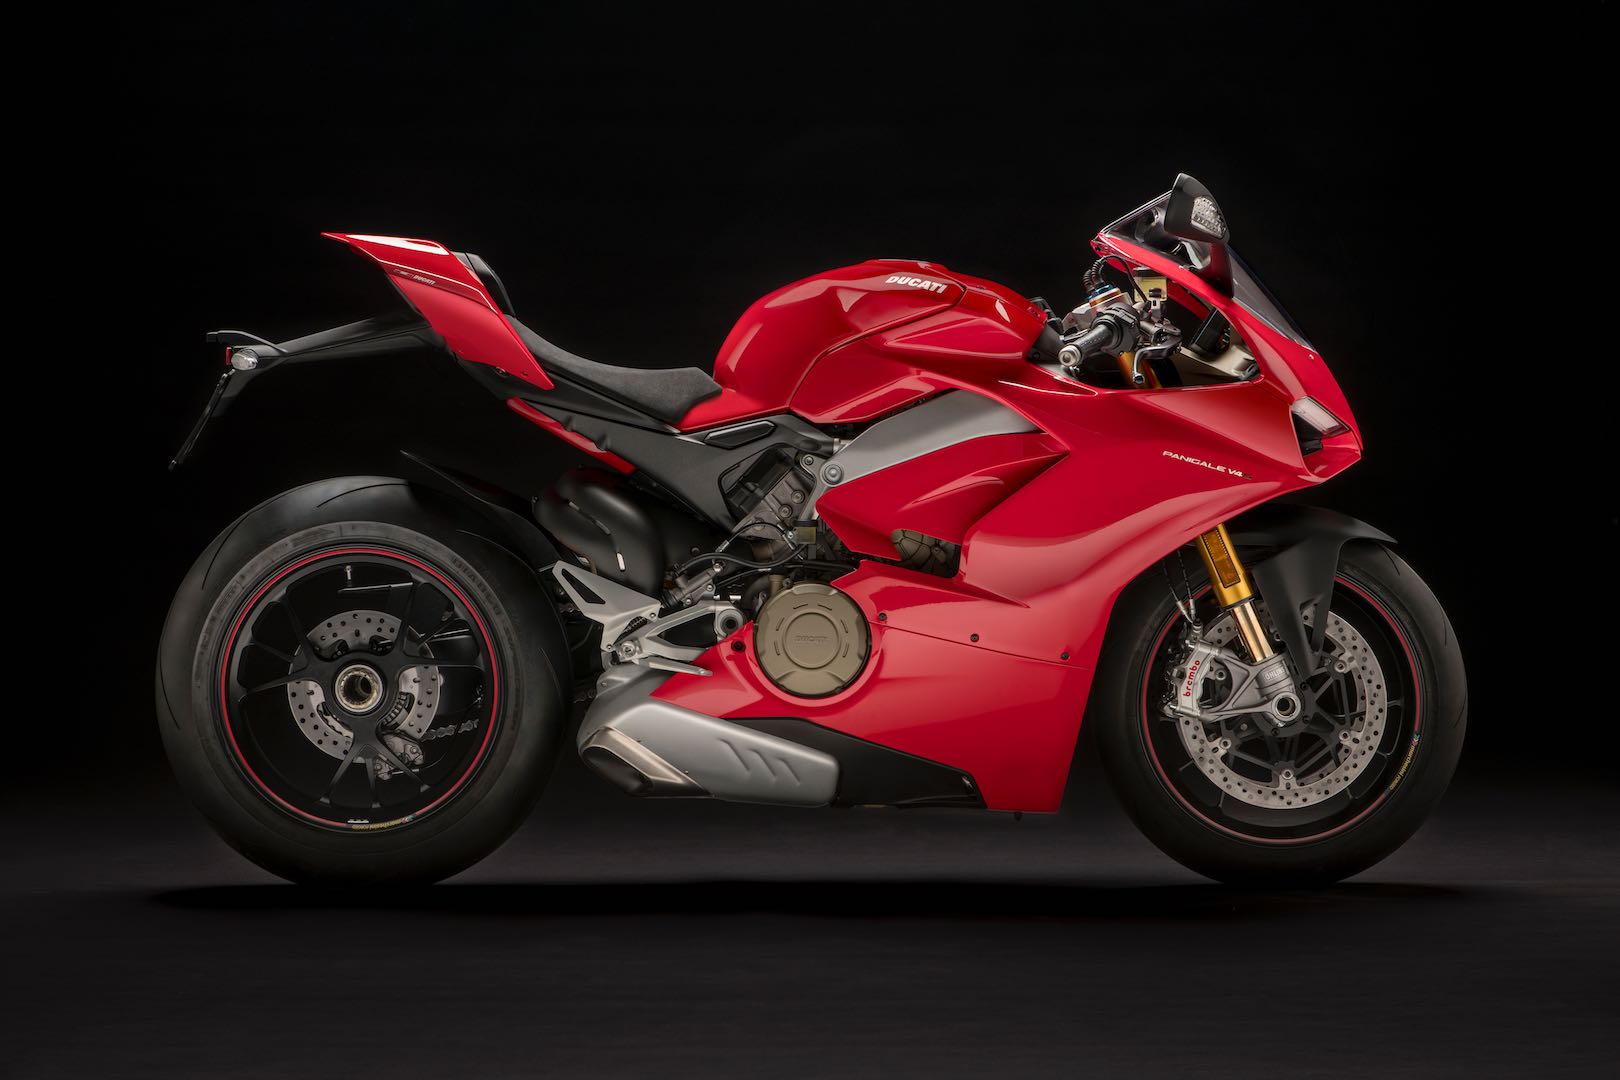 Ducati Panigale V4 S 2018 photo - 1